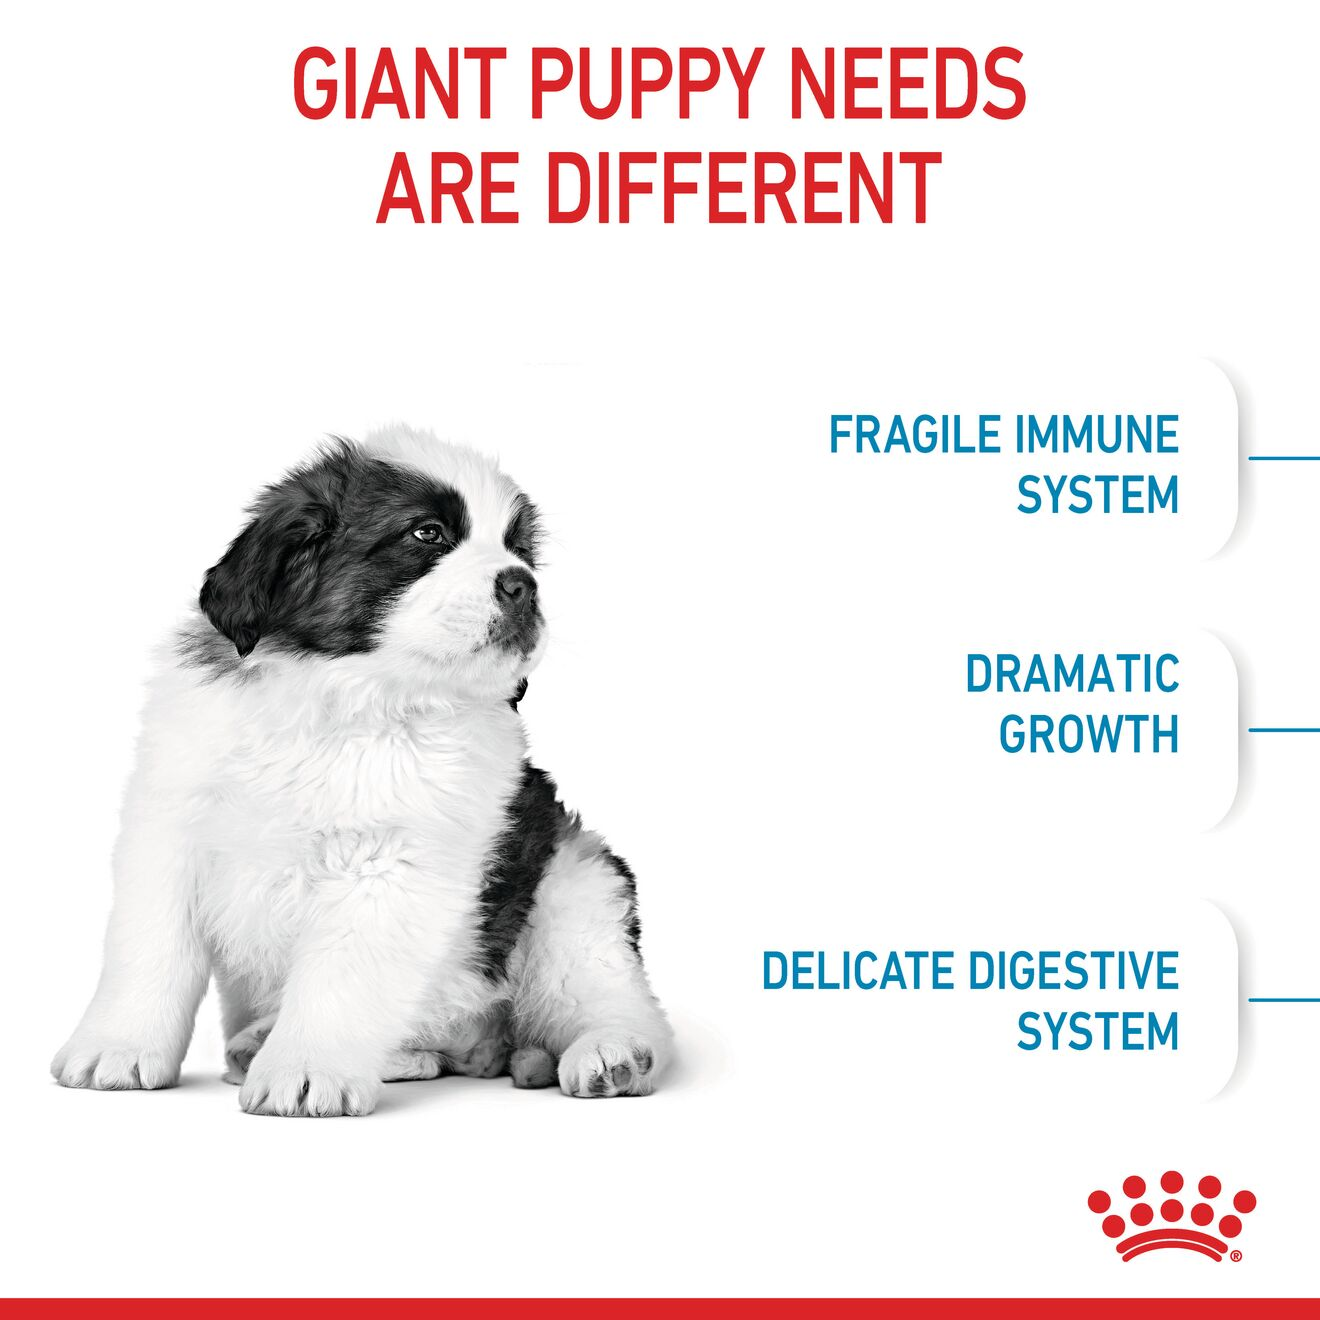 Giant Puppy